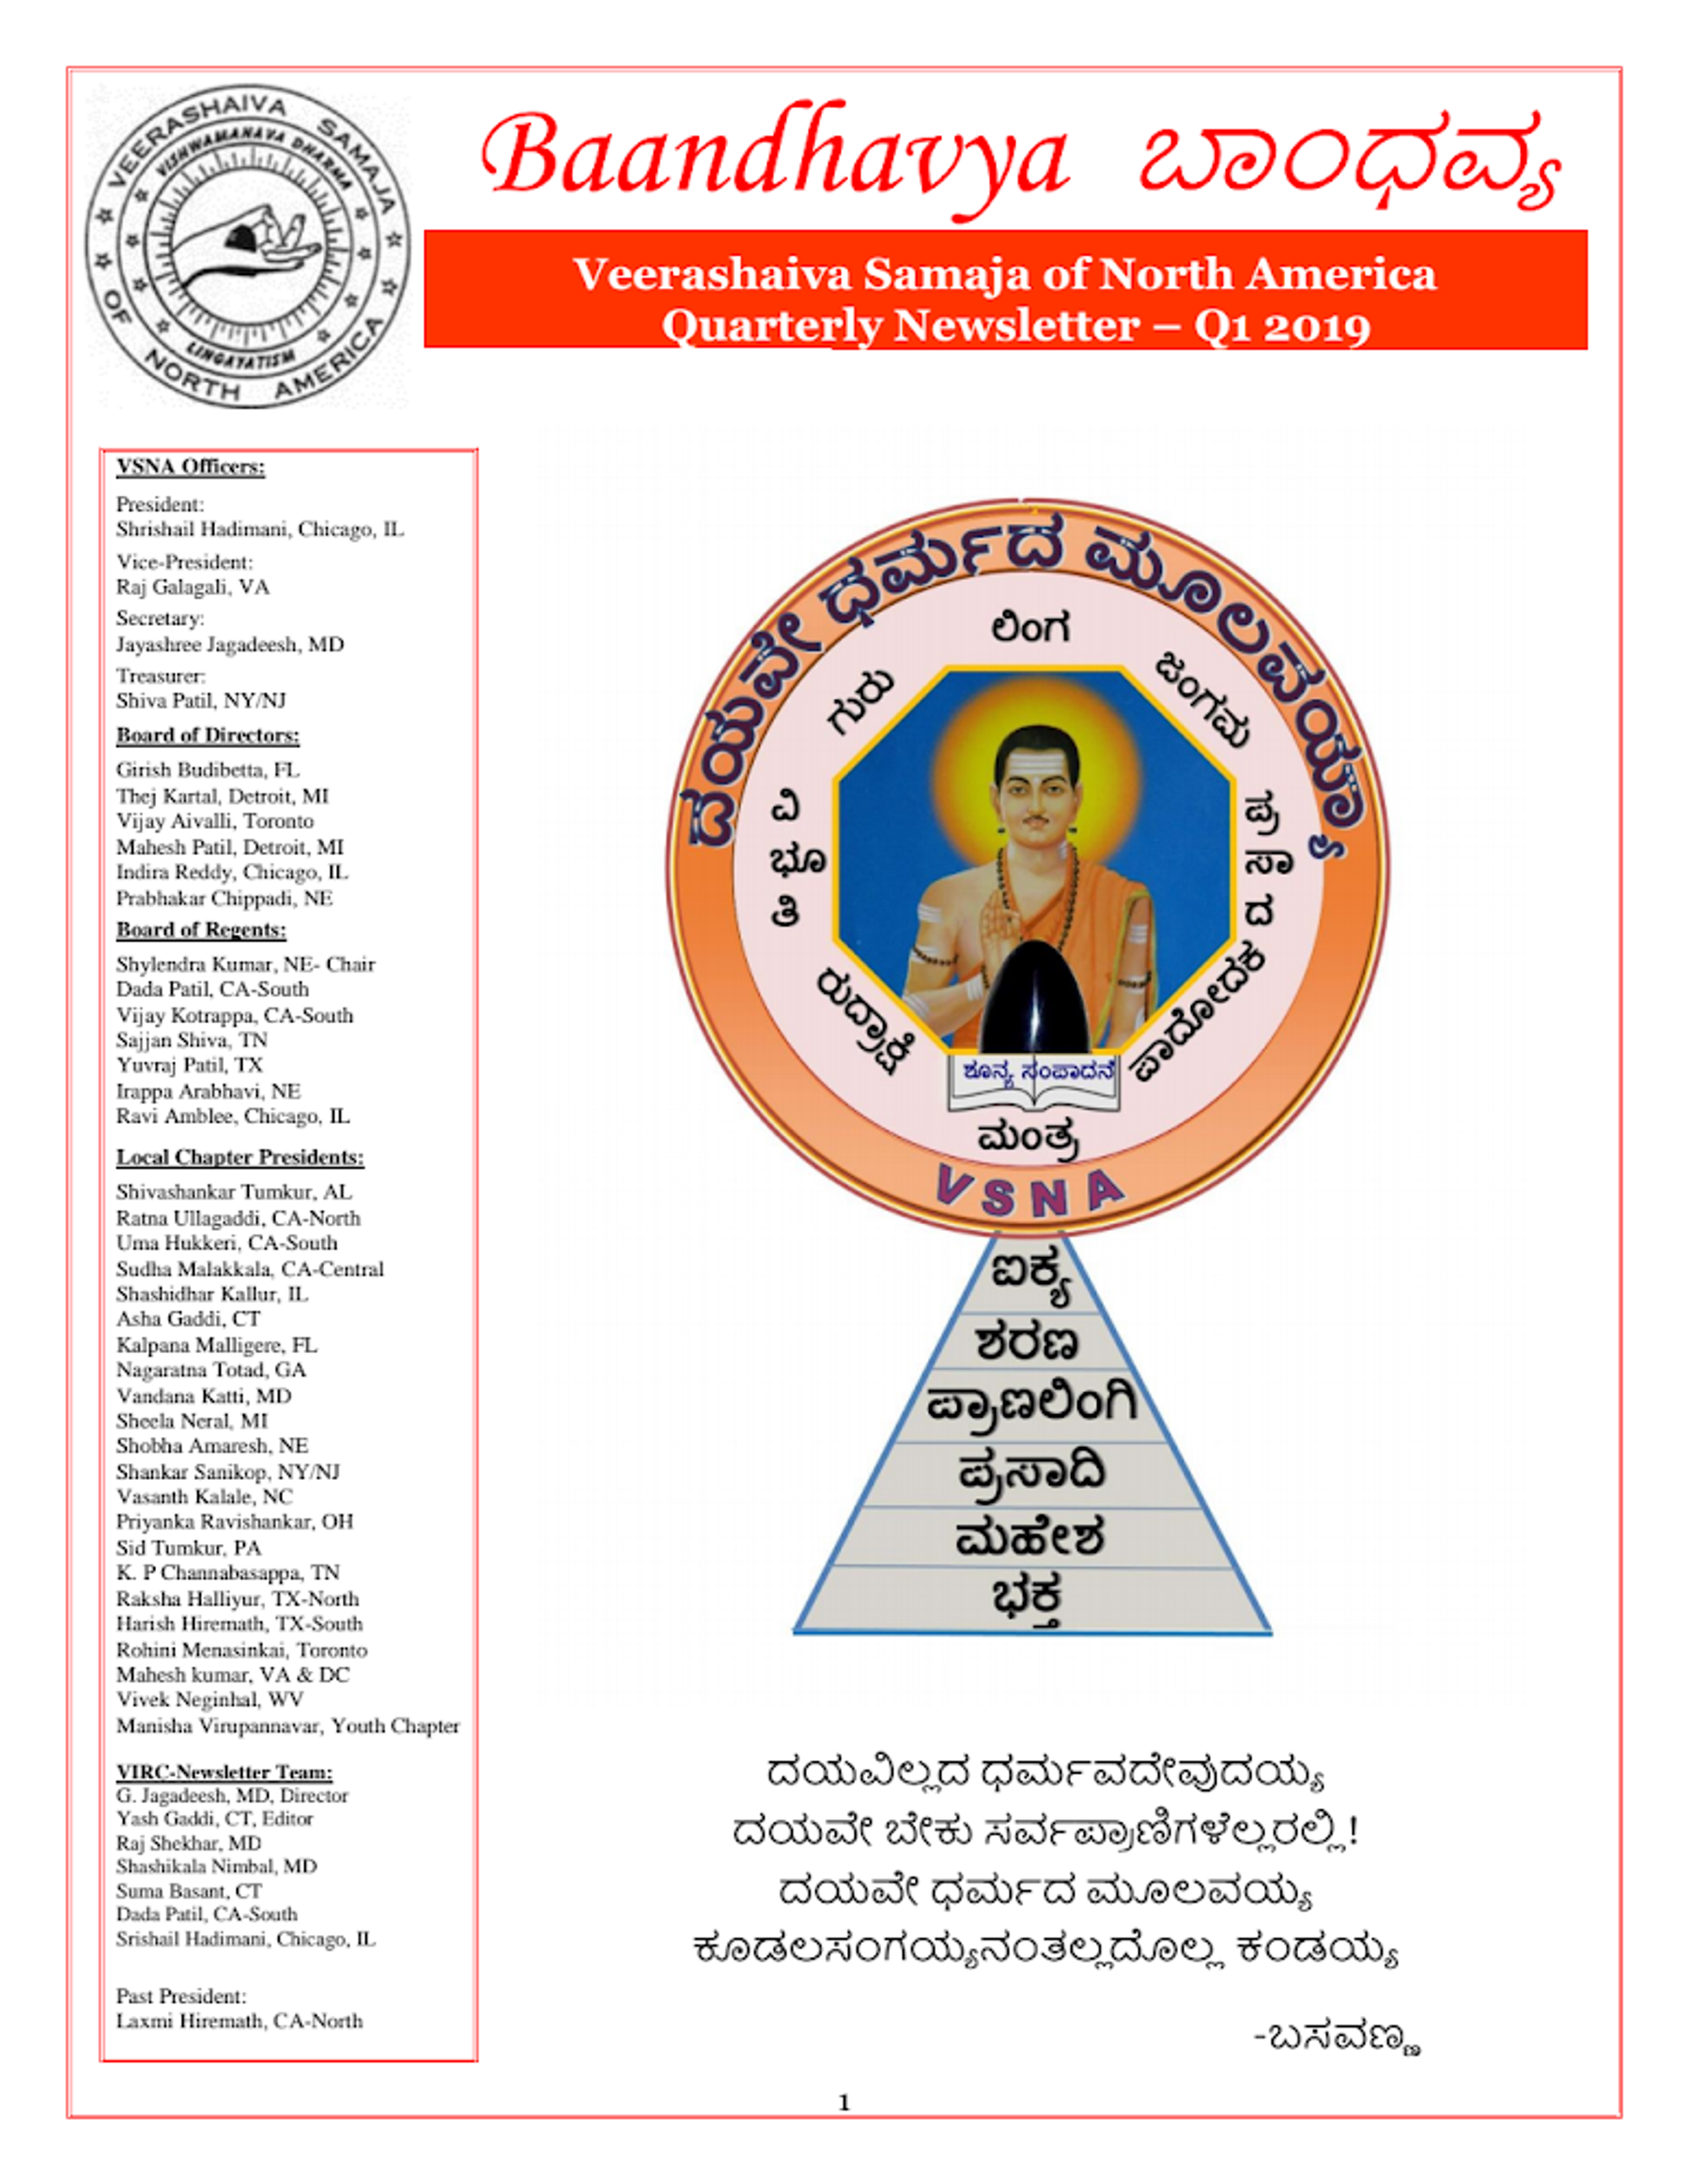 Baandhavya-News letter 2019 (1).pdf